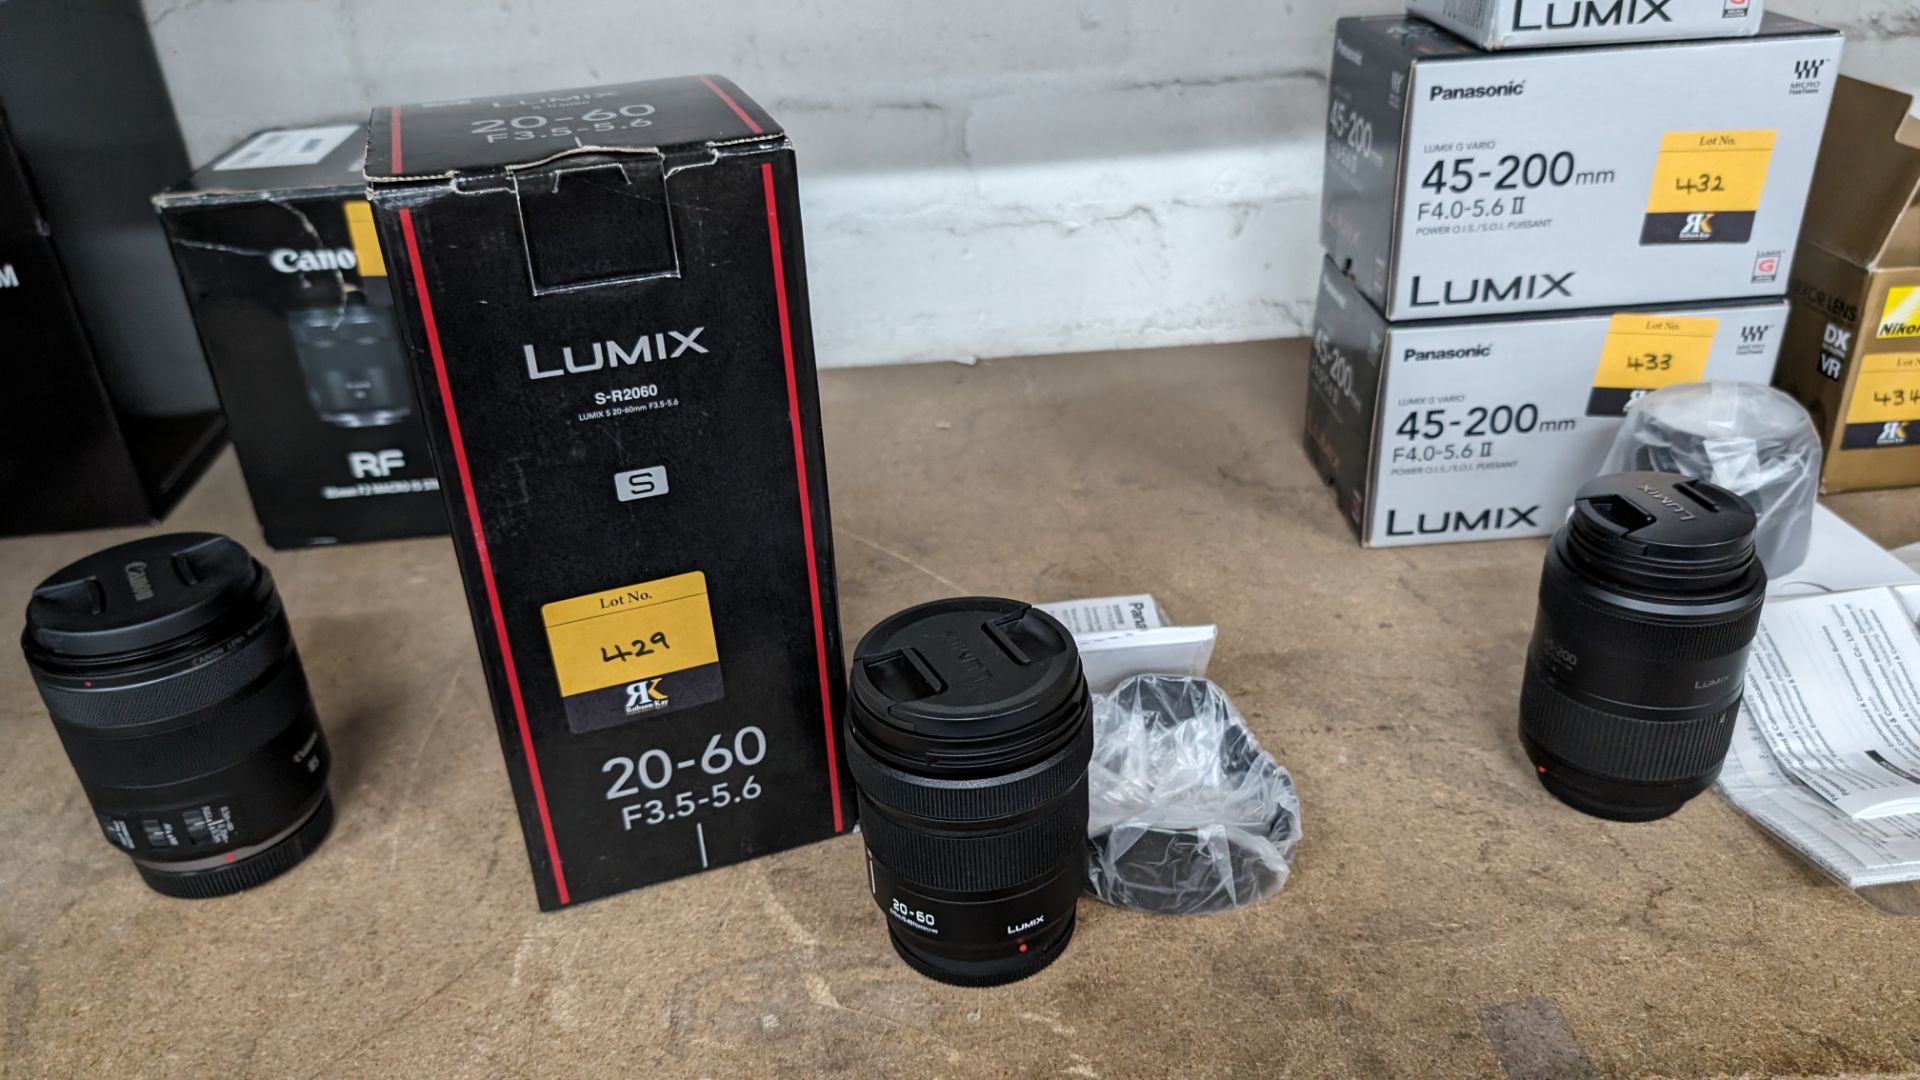 Panasonic Lumix model S-R2060 lens, 20-60mm, f3.5-5.6 - Image 3 of 14